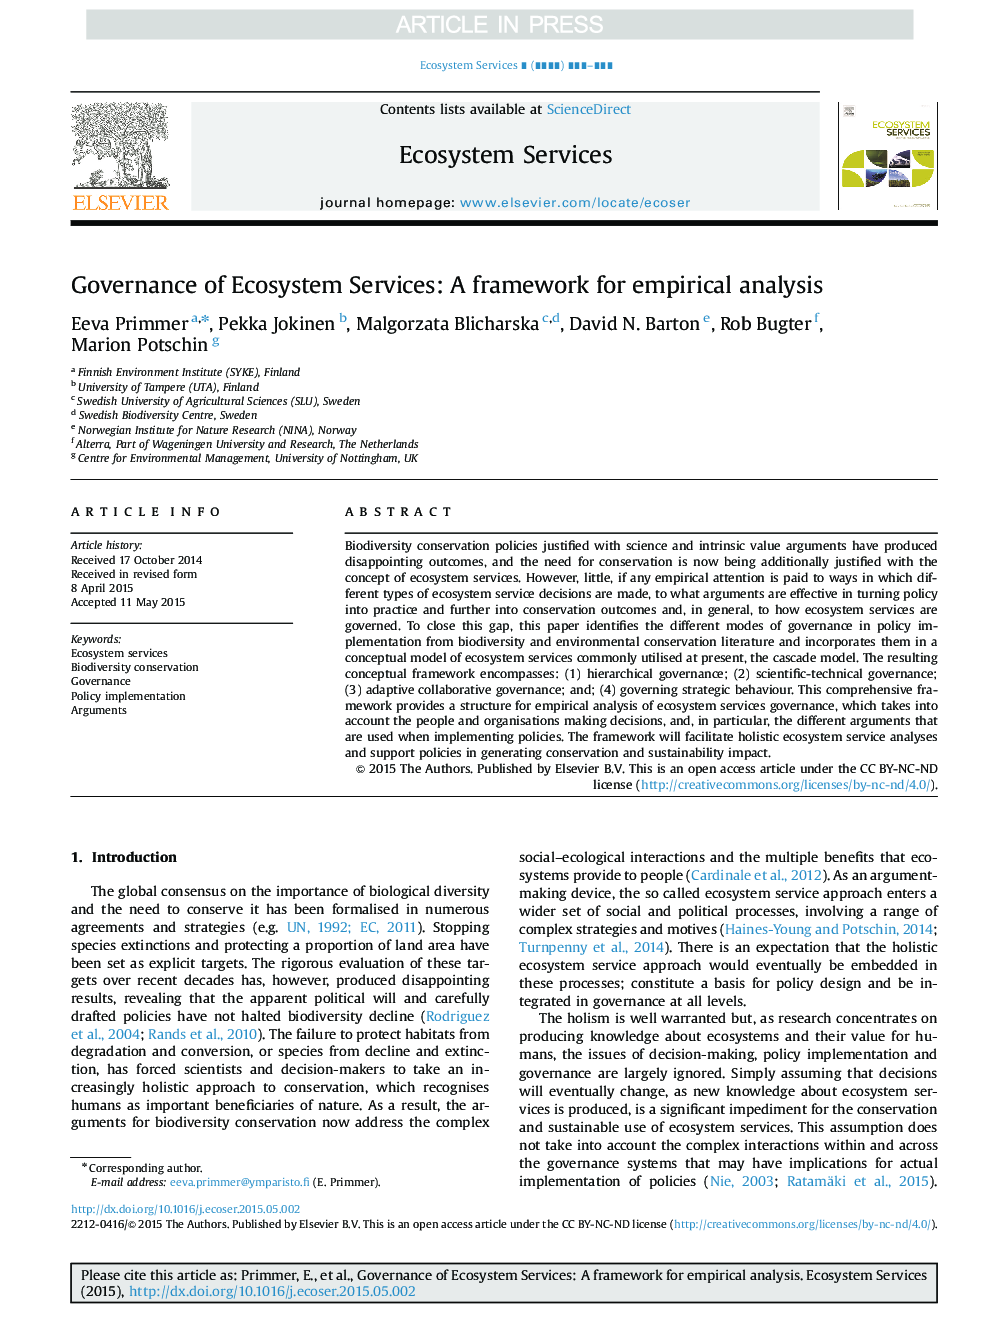 Governance of Ecosystem Services: A framework for empirical analysis